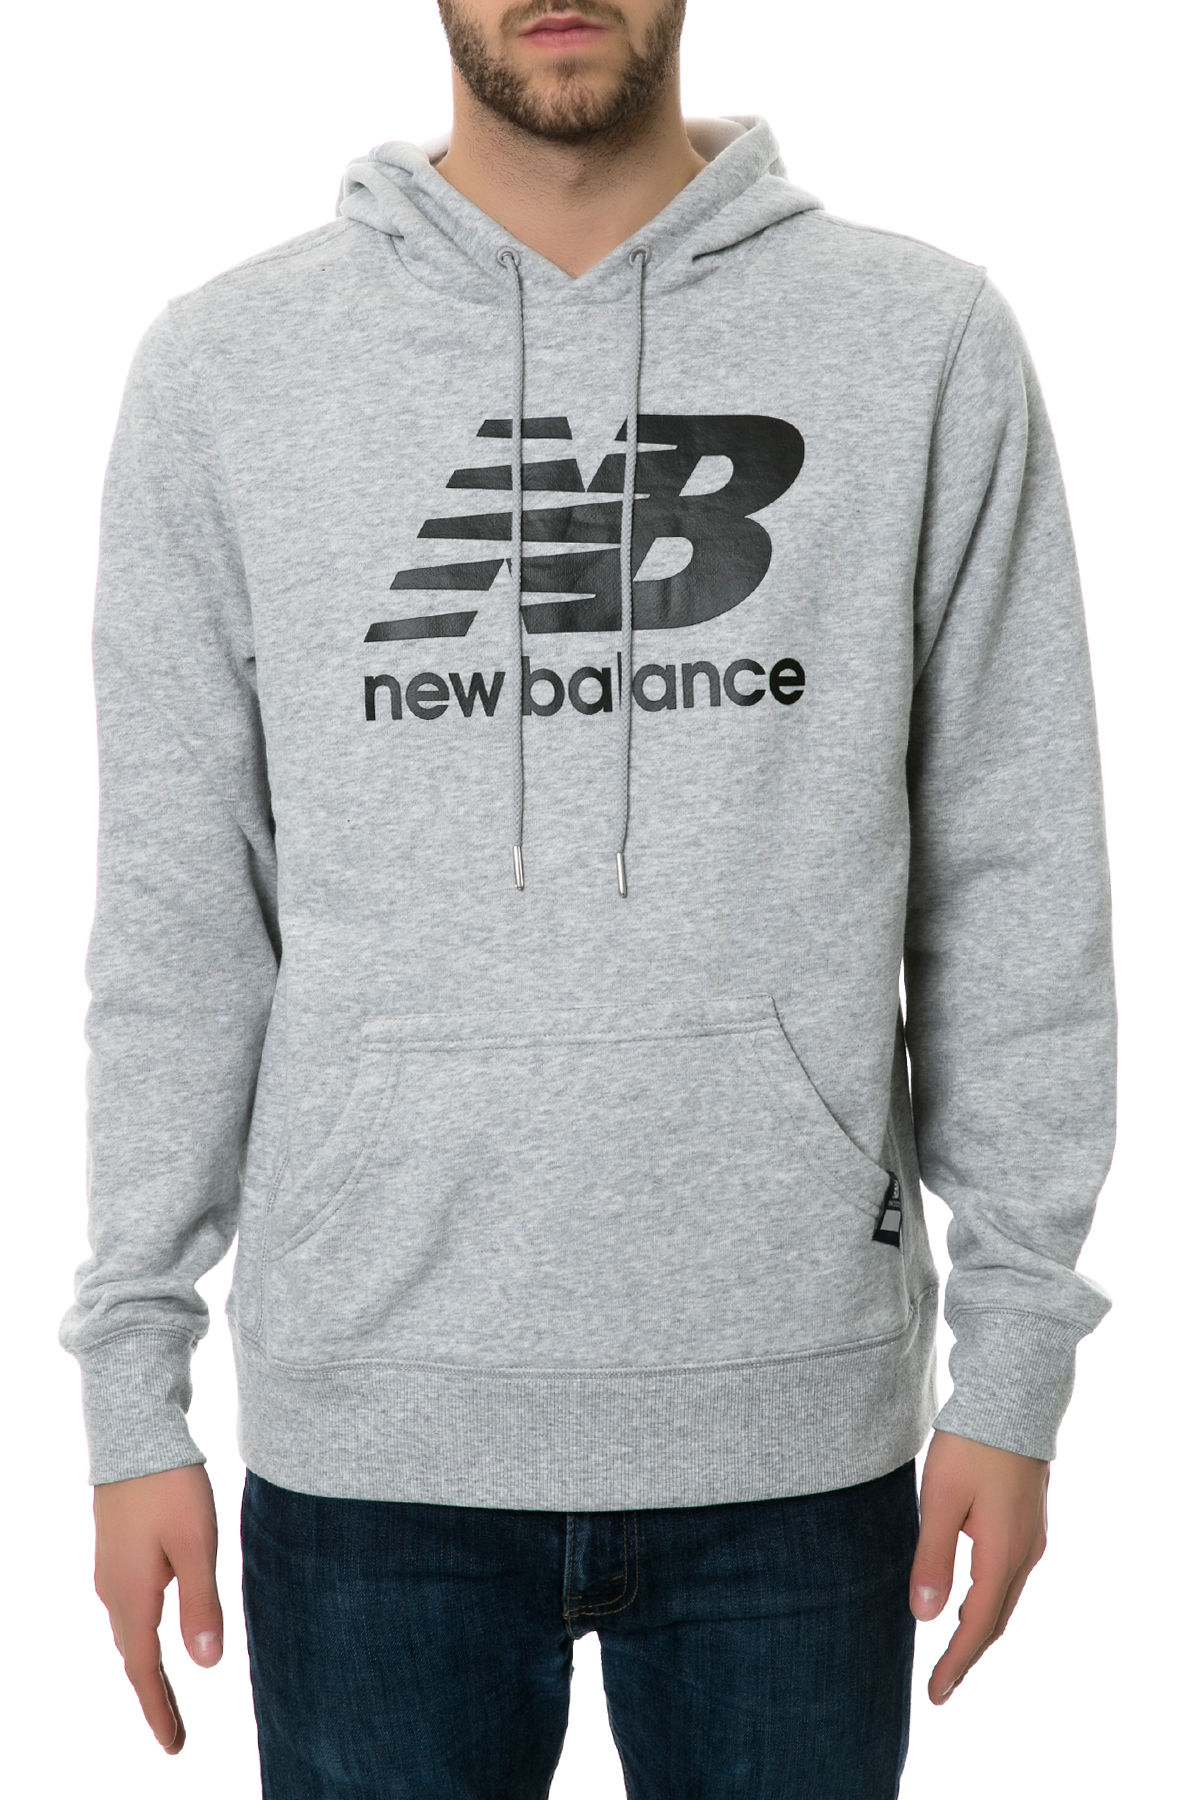 Buy > grey new balance hoodie > in stock